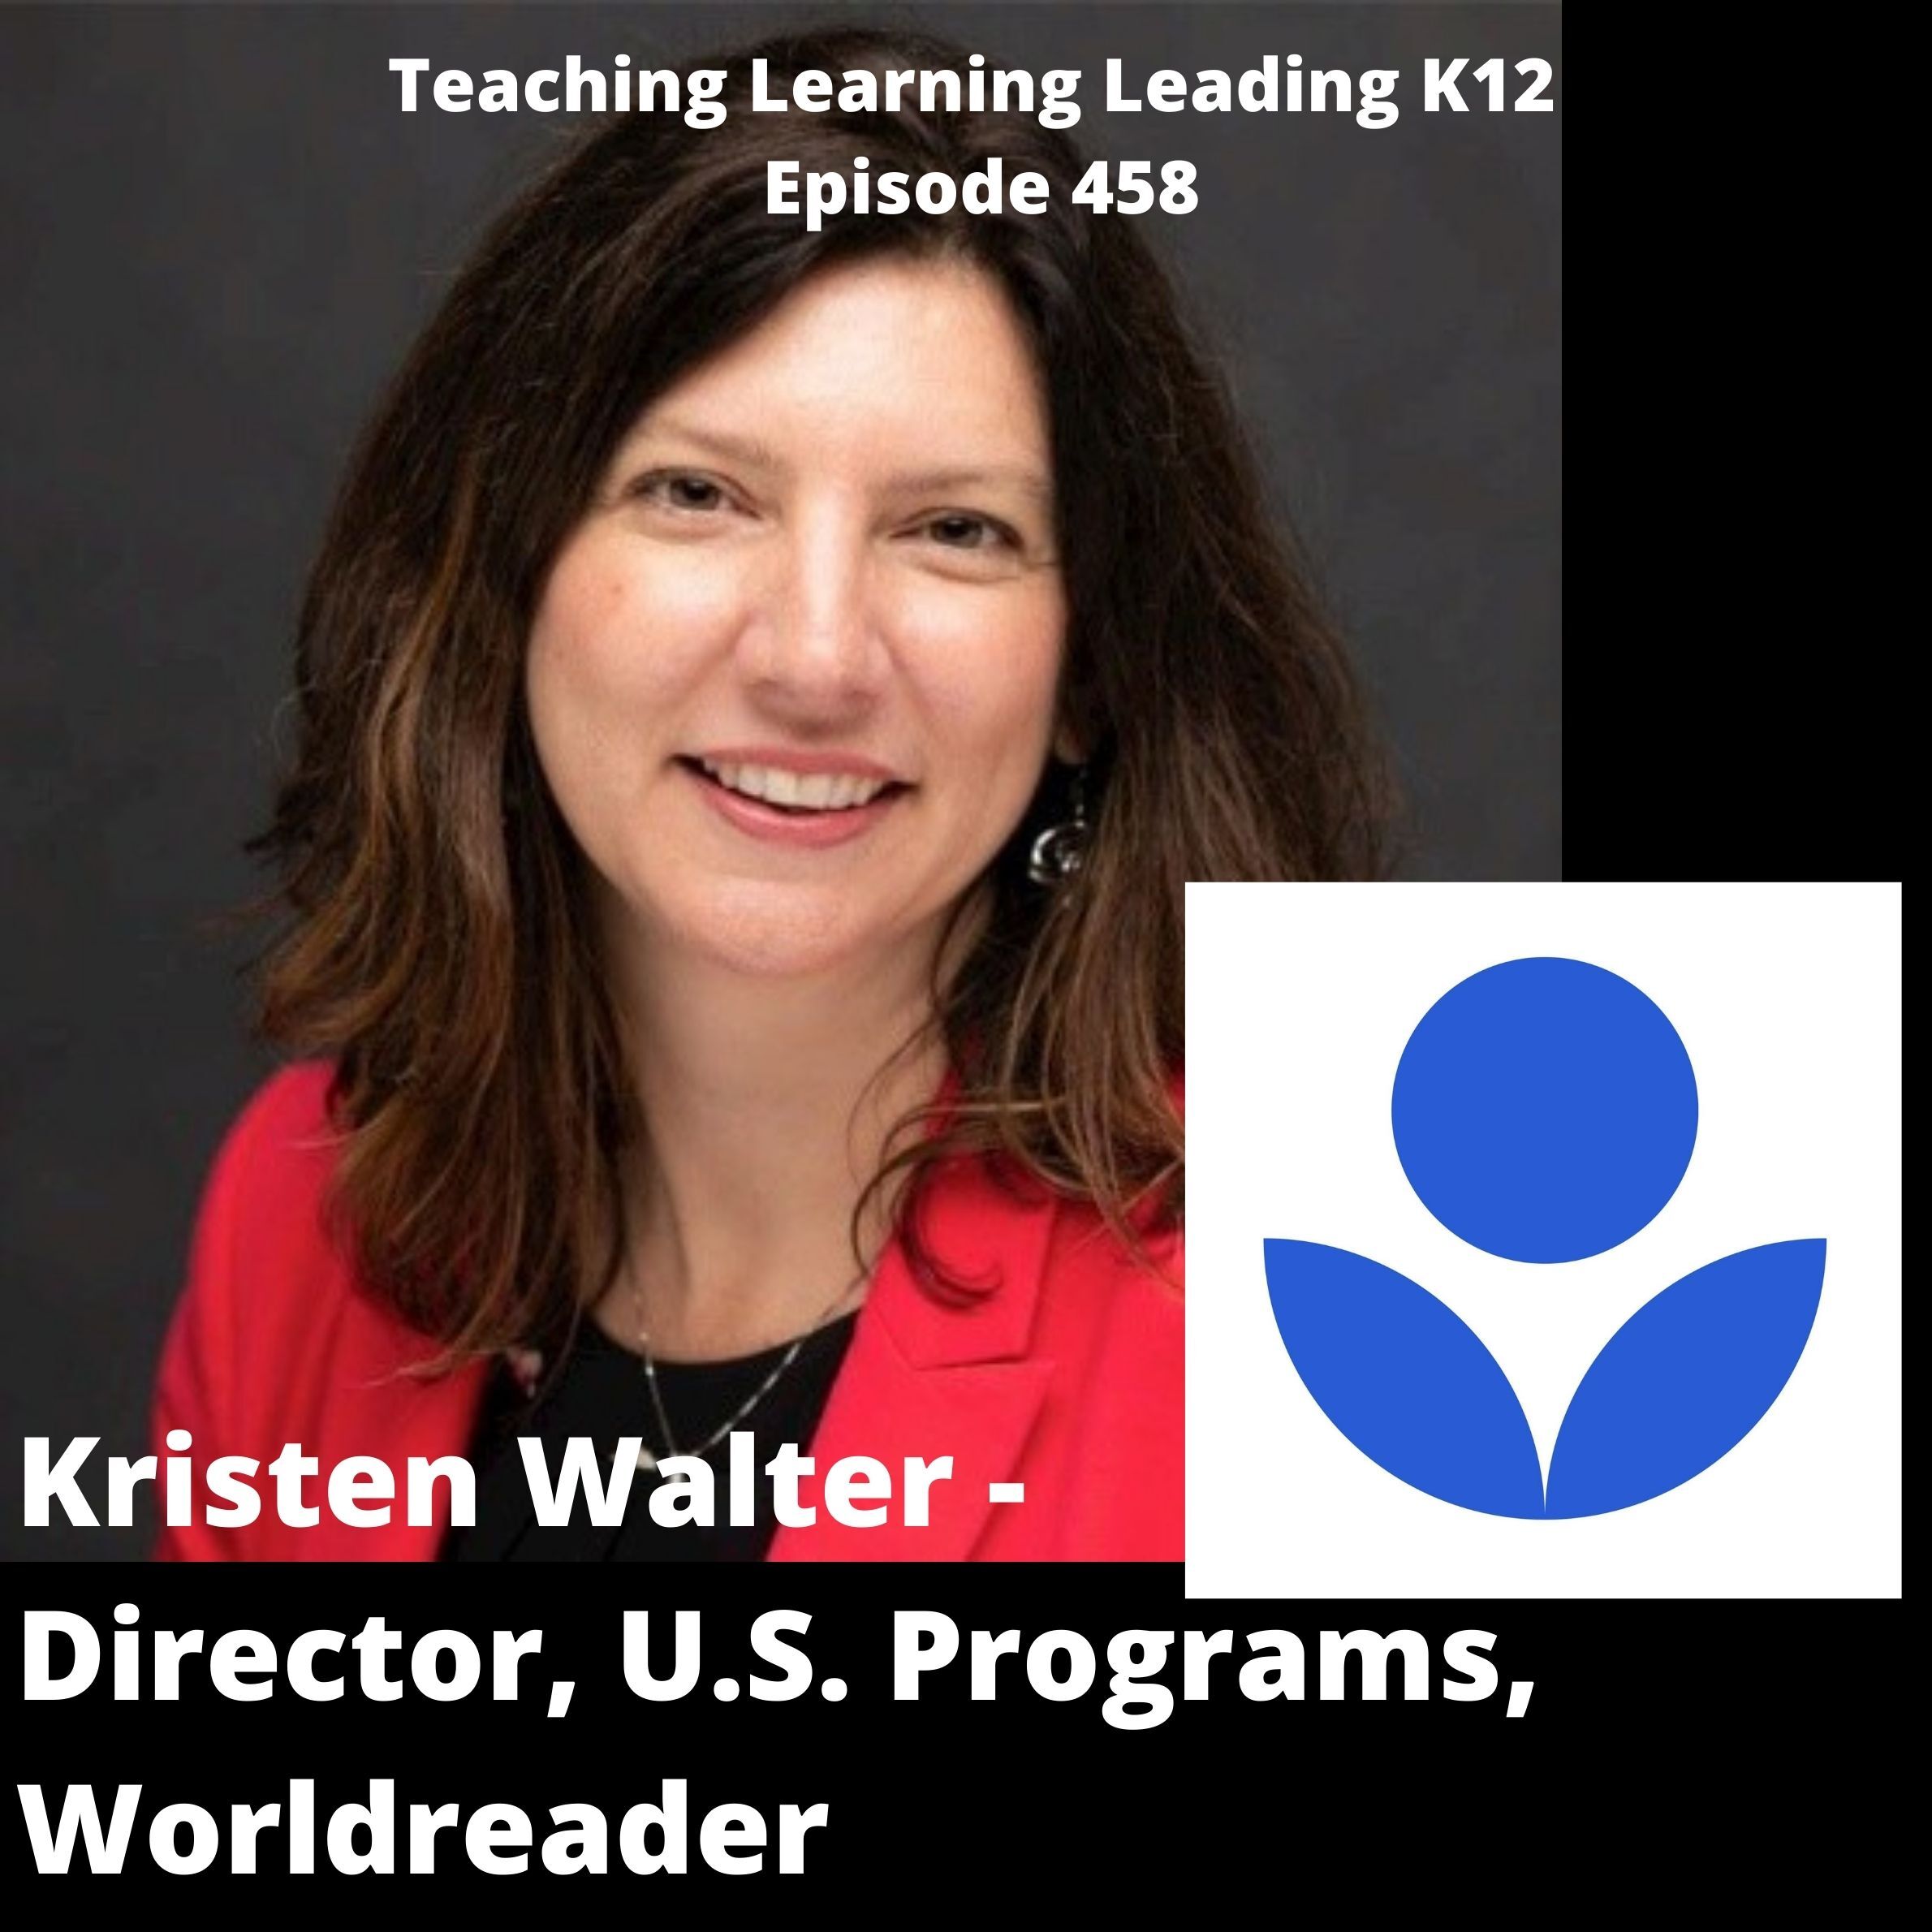 Kristen Walter, Director - U.S. Programs, Worldreader - 458